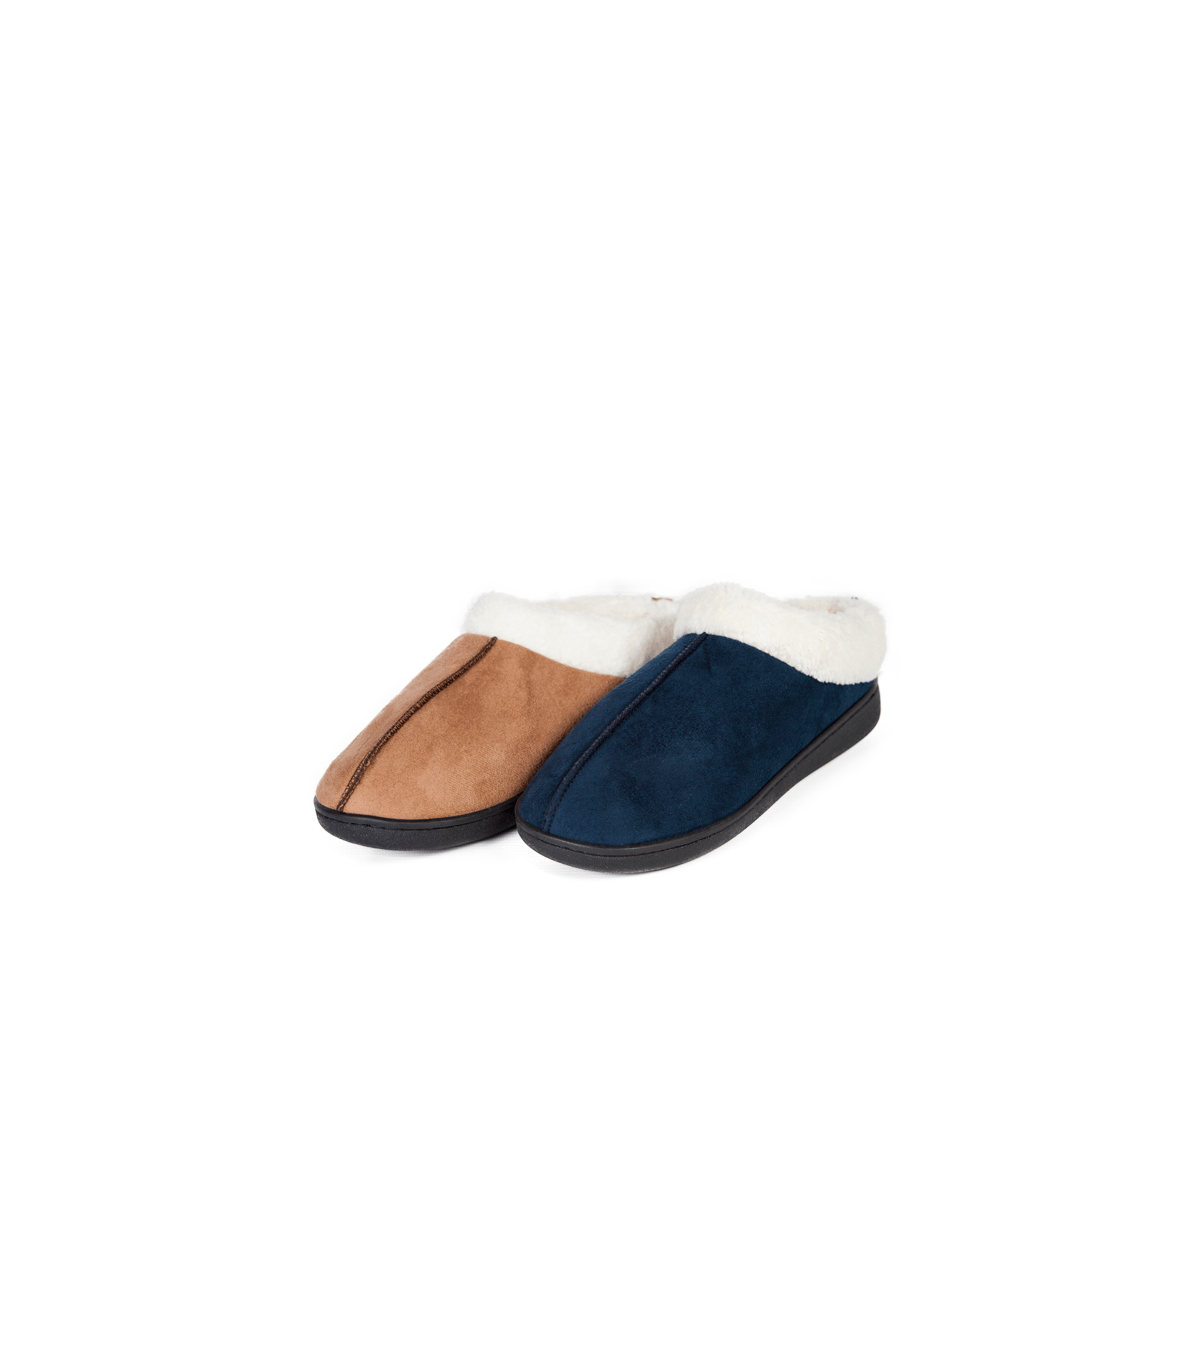 Haga clic en calzado de seguridad Micro Fibra Slipper BL 10 